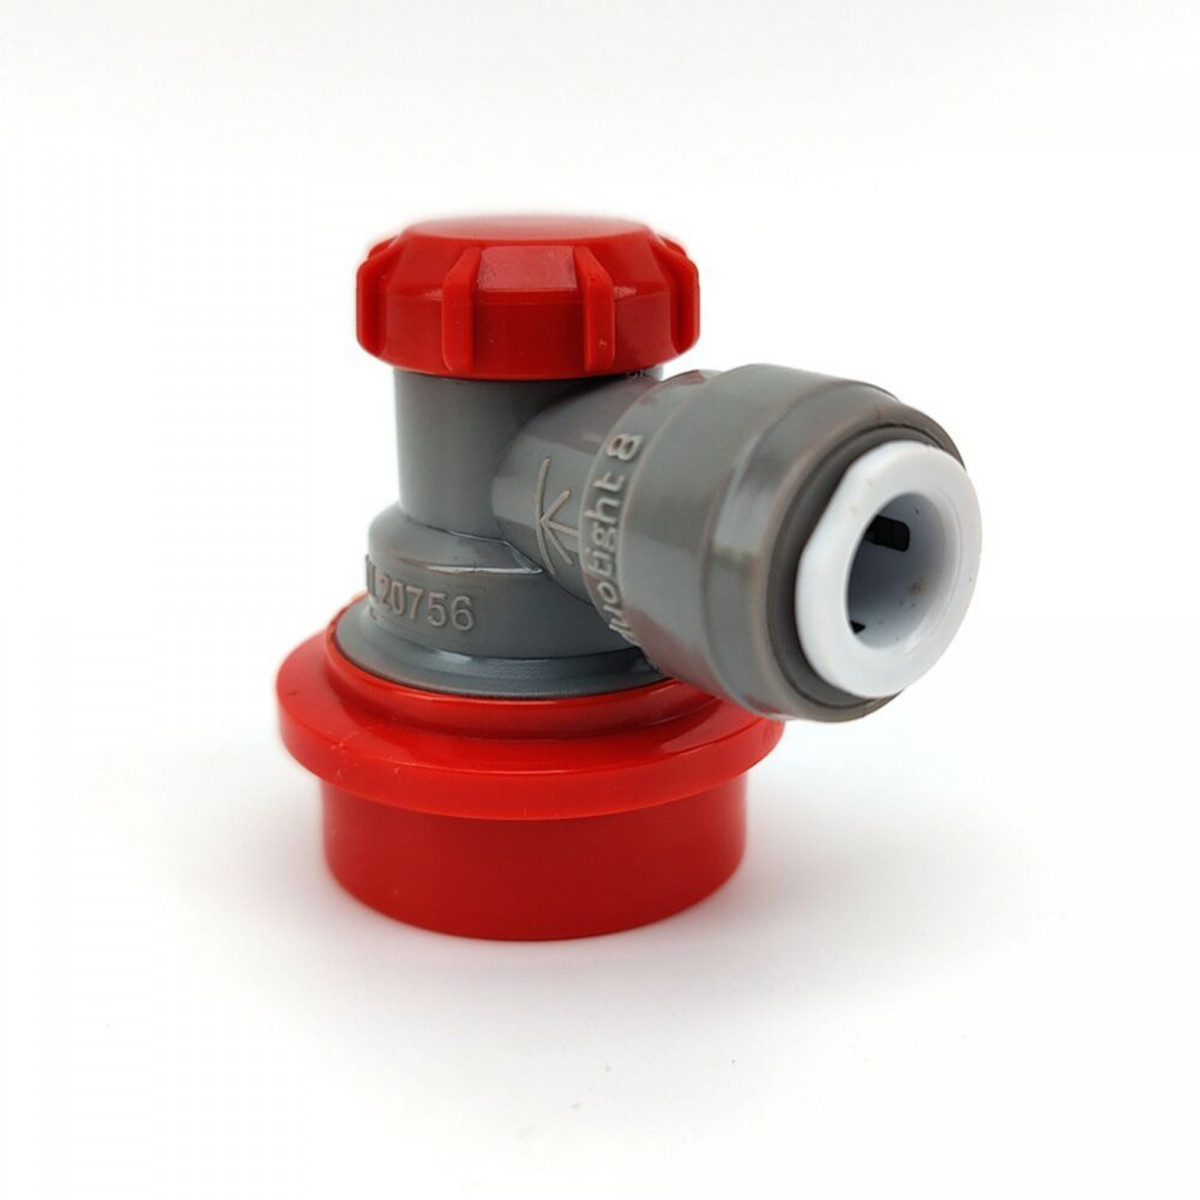 Duotight 8 mm (5/16") vers connecteur ball-lock (gaz)